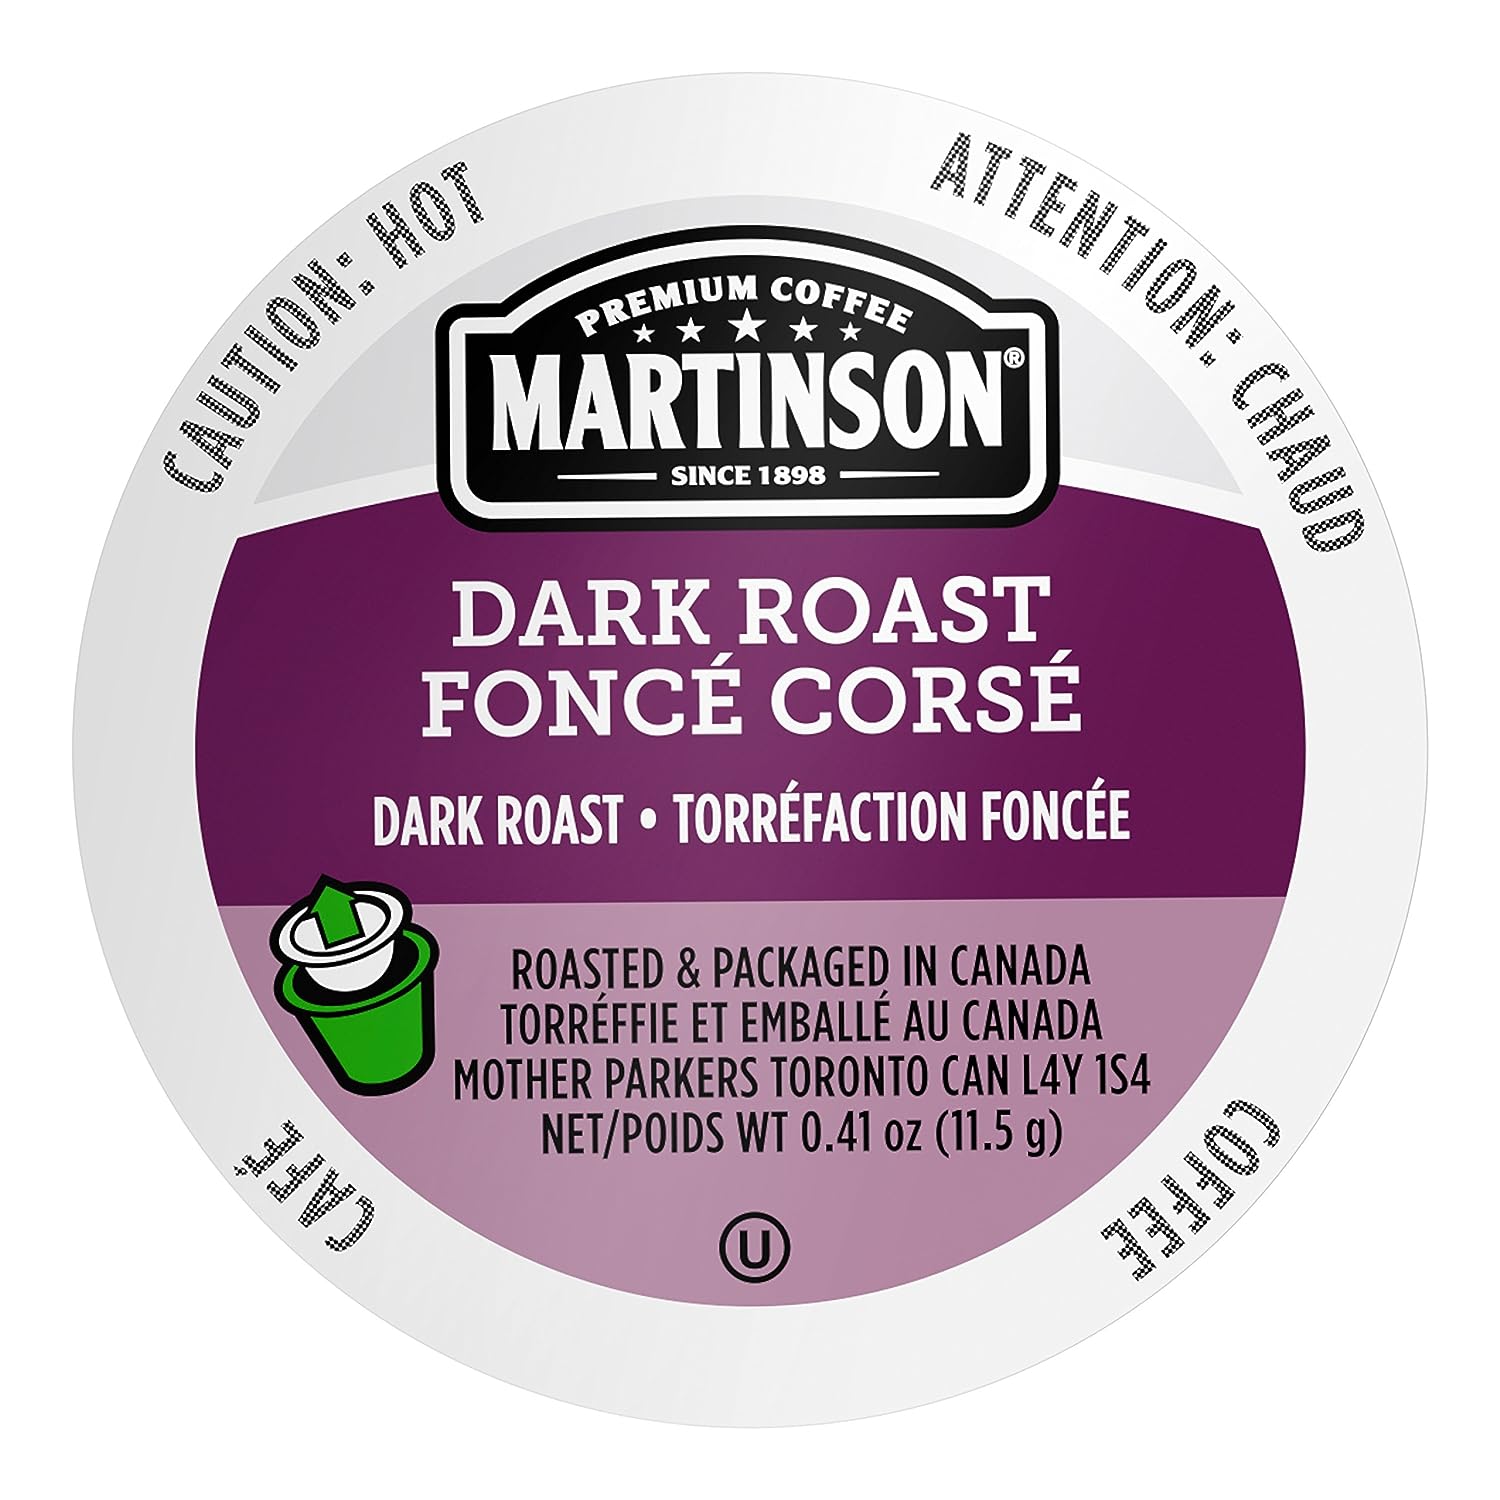 Martinson Dark Roast, Dark Roast Coffee, Keurig K-Cup Brewer Compatible Pods, 48 Count (Pack of 1)